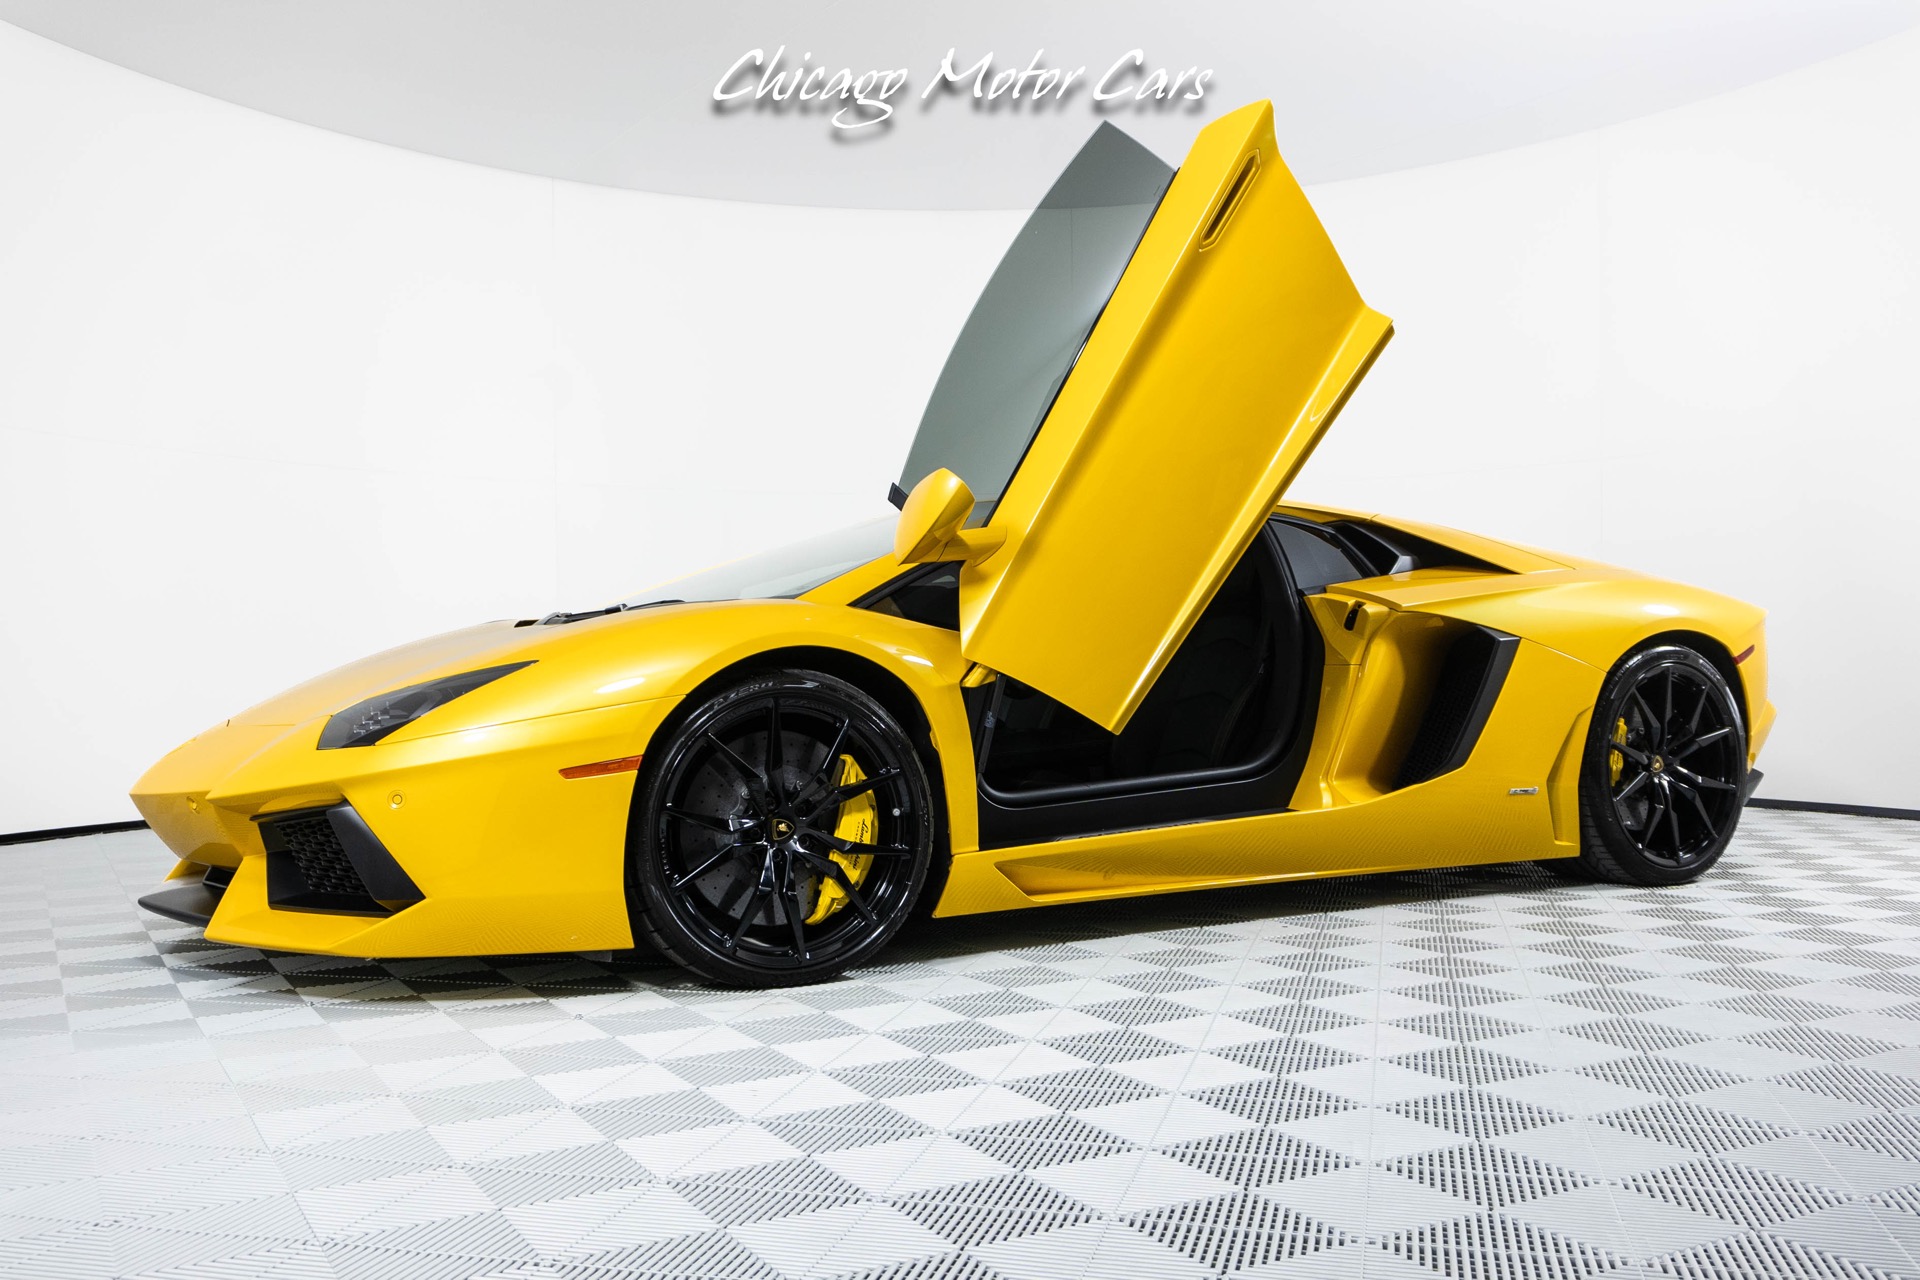 Lp700 Car Side Rearview Mirror Covers for Lamborghini Aventador 3K